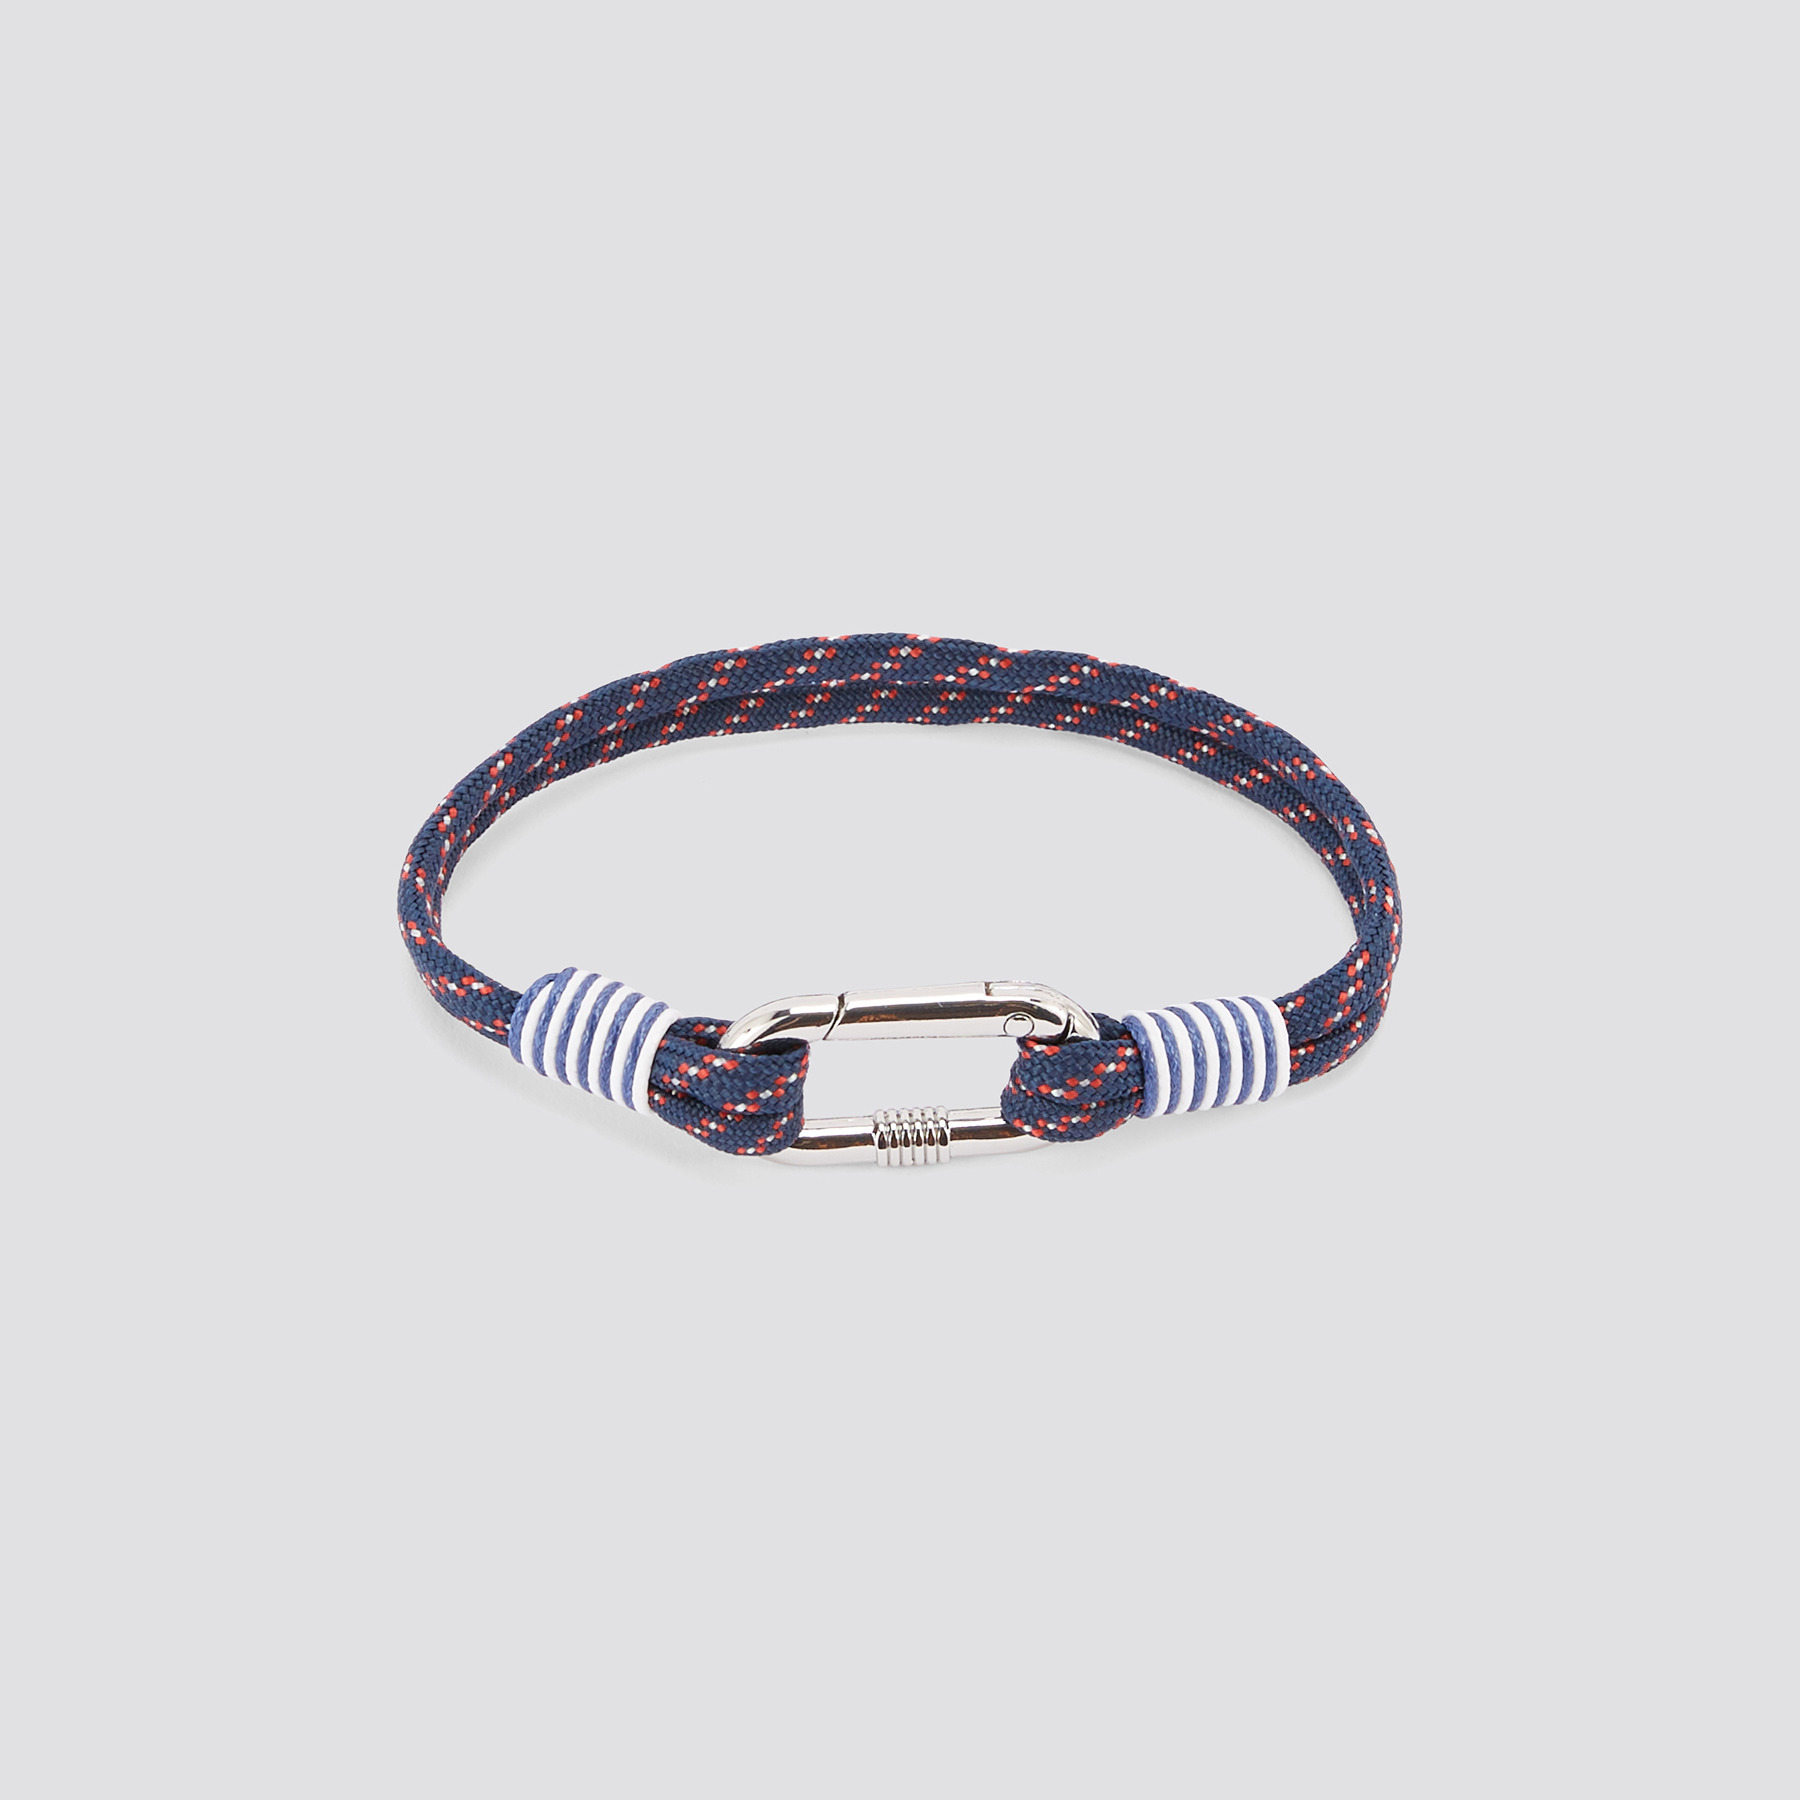 Bracelet lien cordelette Bleu foncé T.U. 100% Zinc, 100% Polypropylene, 100% Polyester Homme Jules